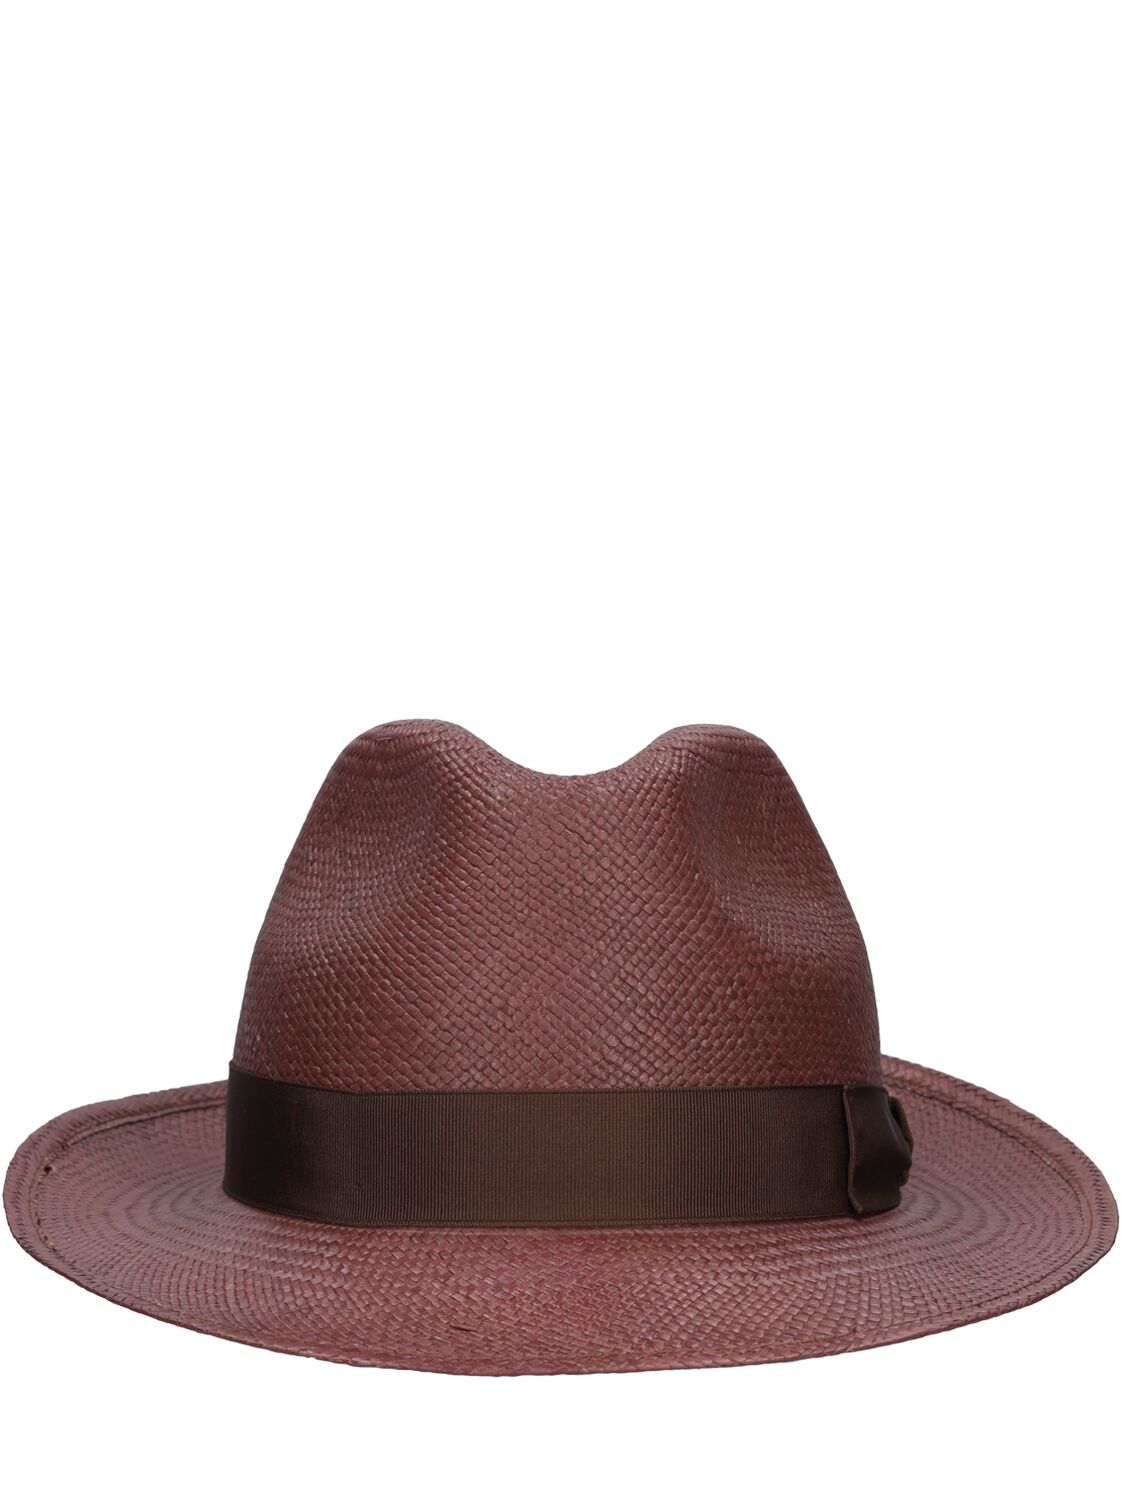 Borsalino Federico 6cm Brim Straw Panama Hat In Bordeaux